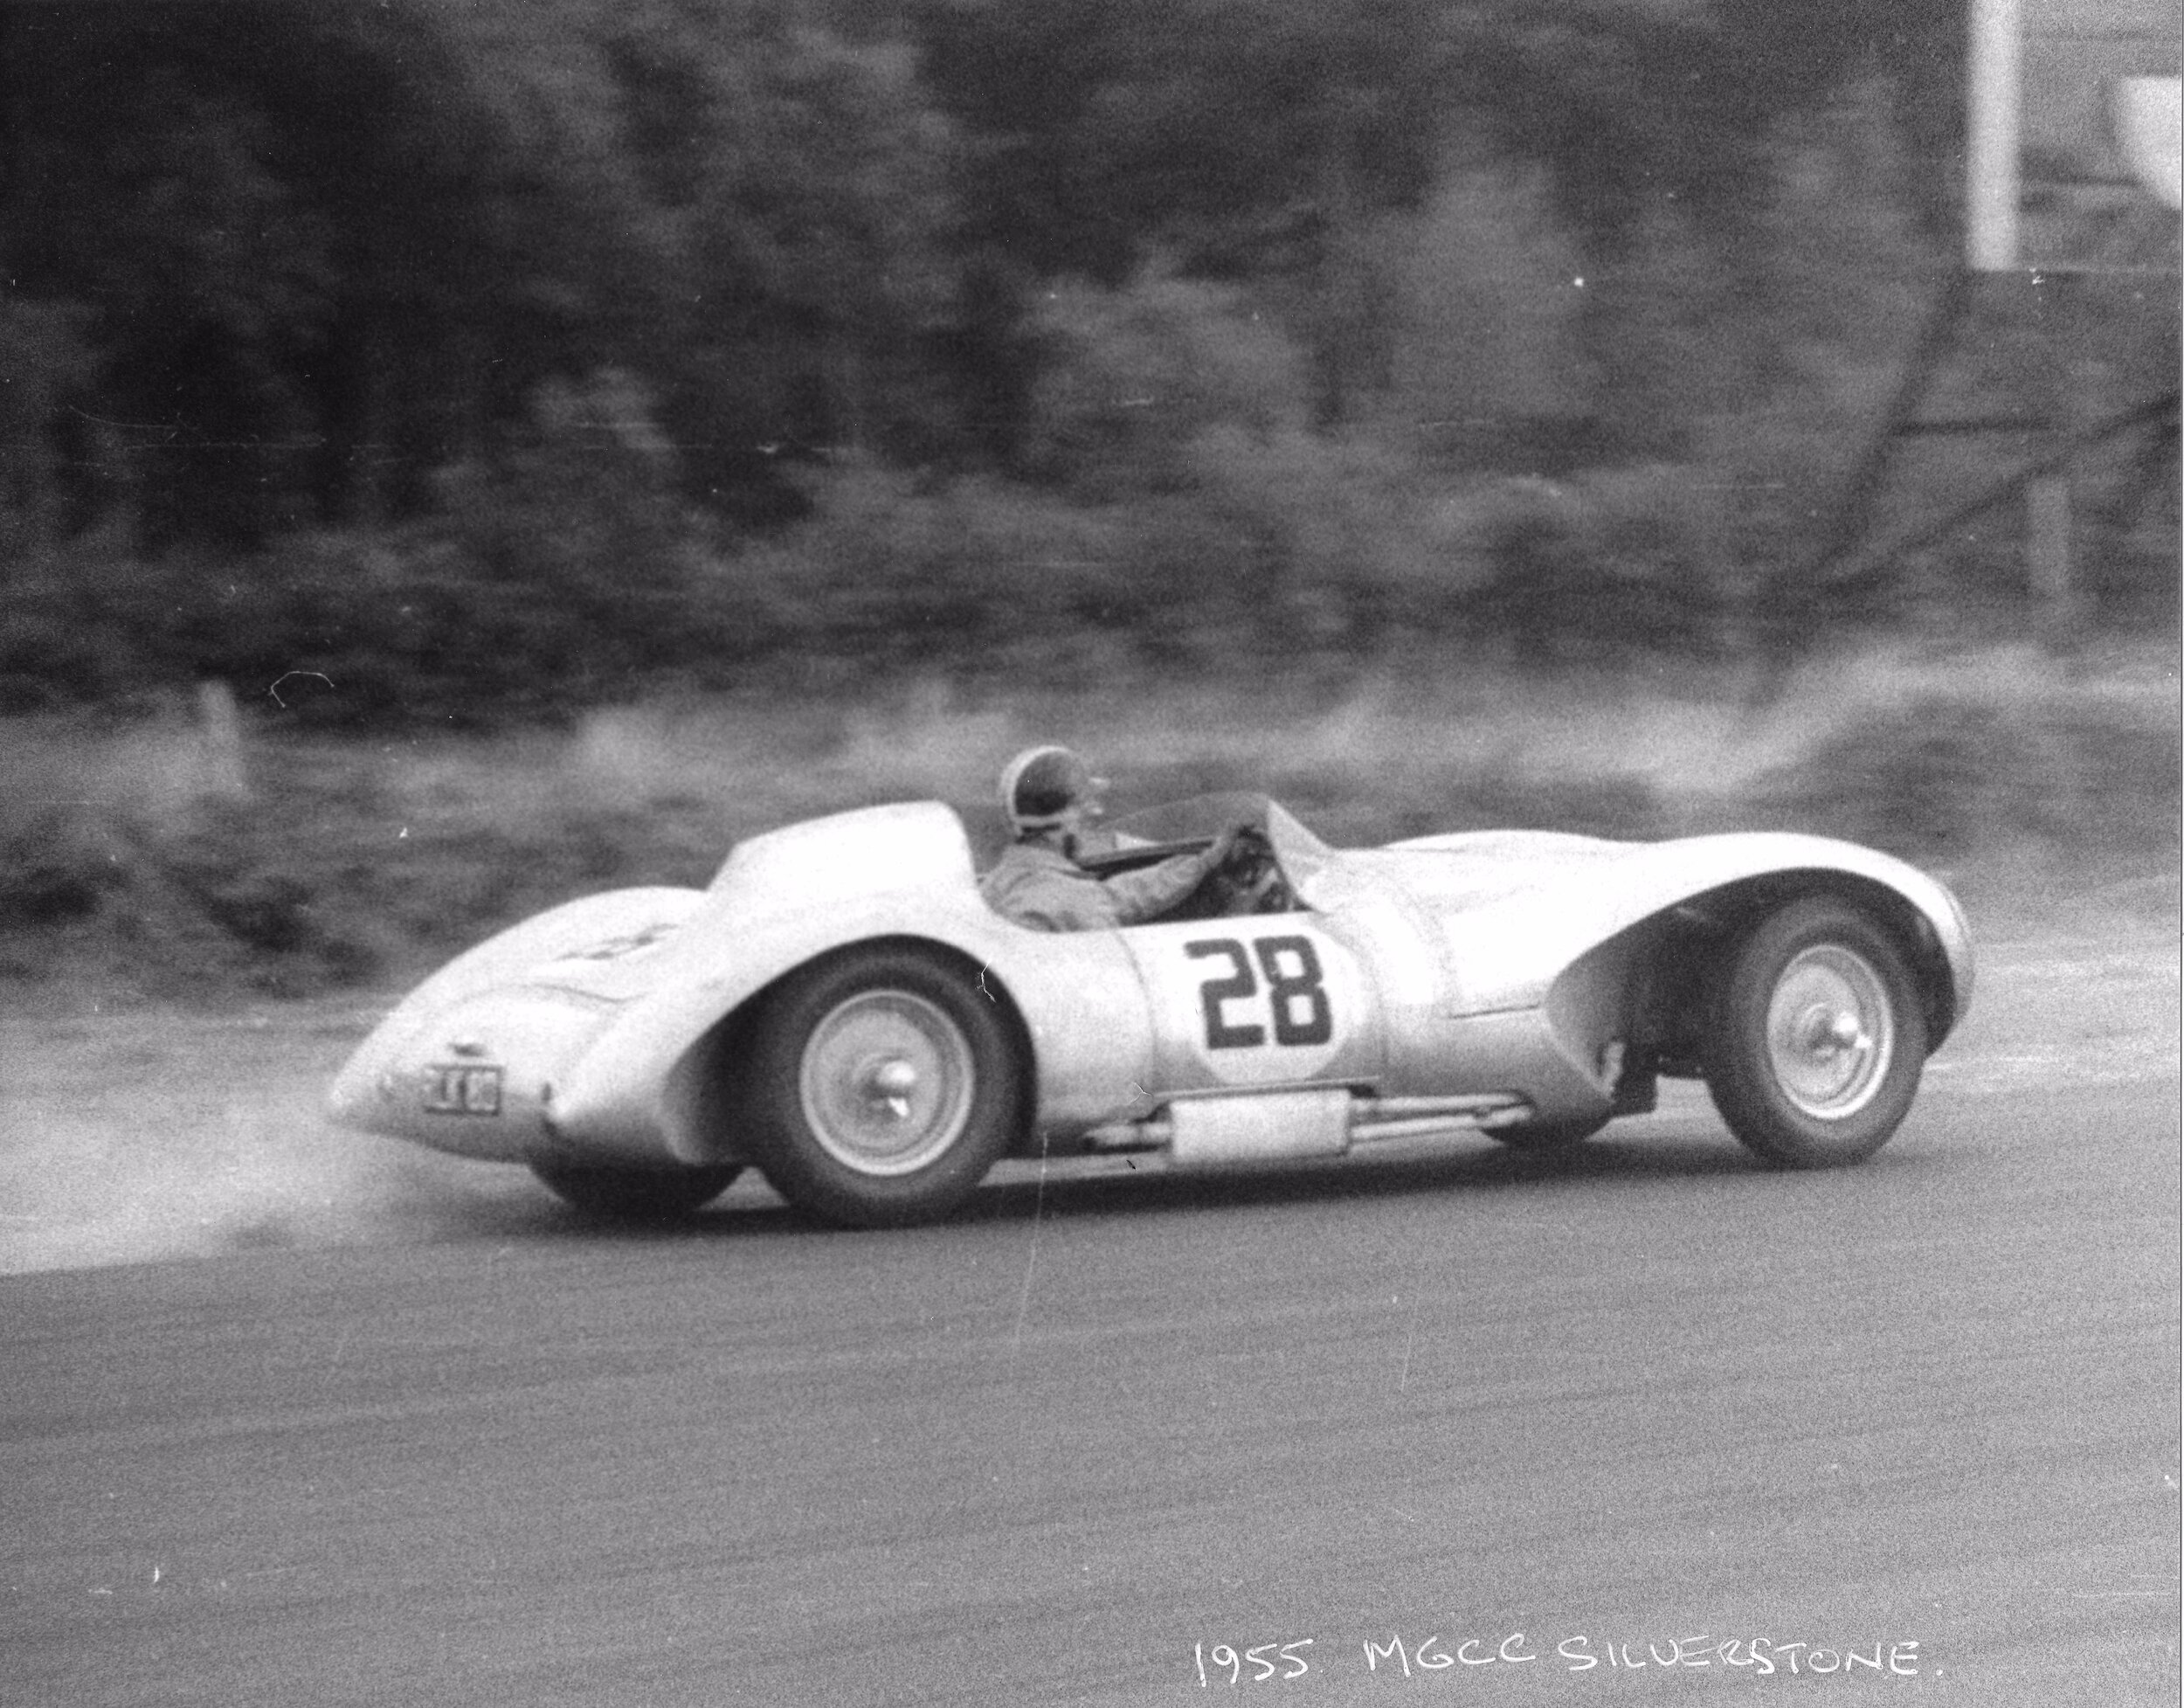 MGCC Silverstone, 1955